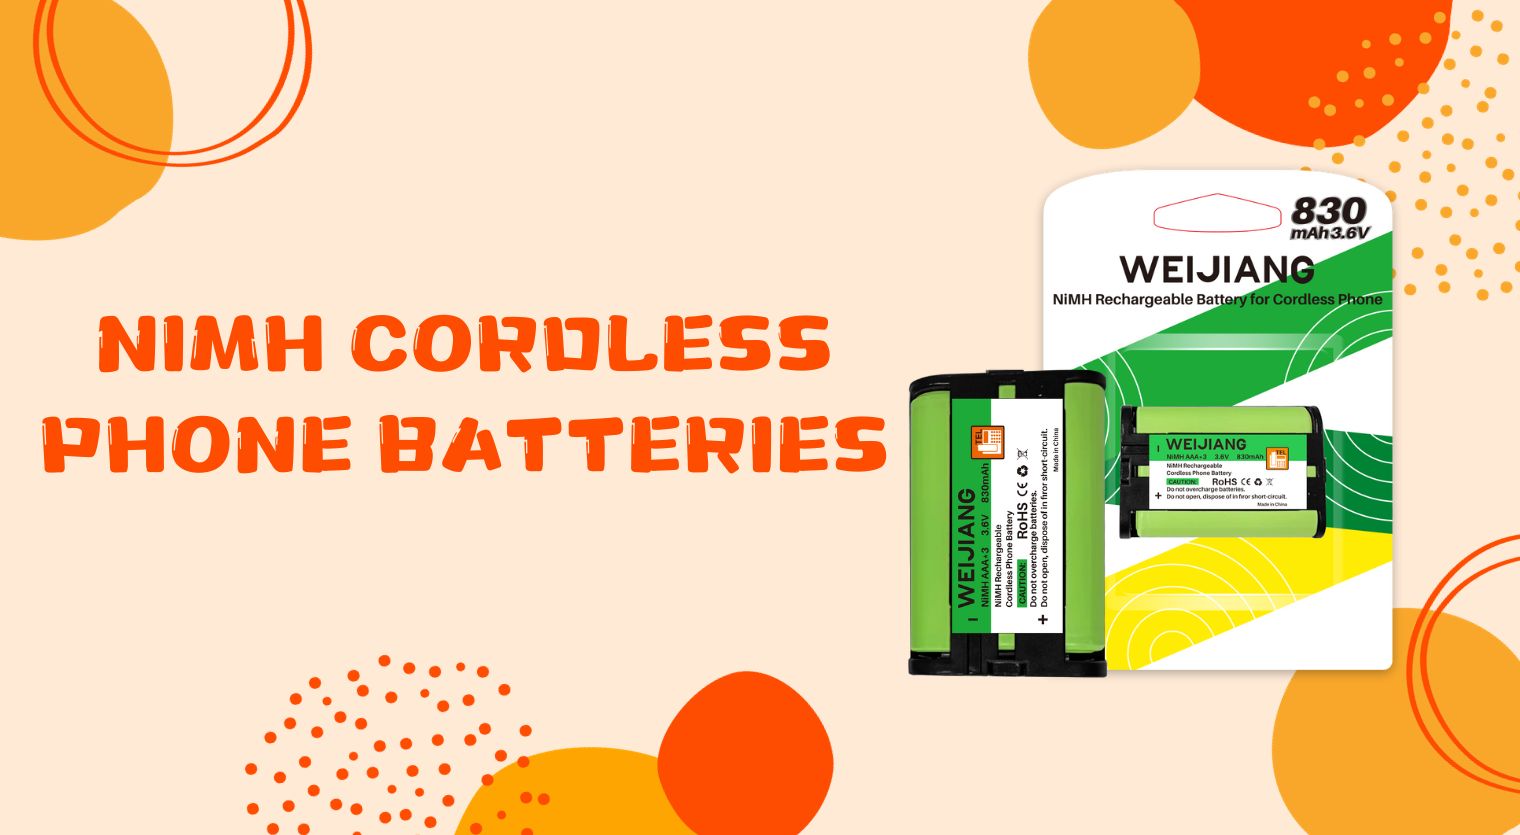 NiMH Cordless Phone Batteries (2)